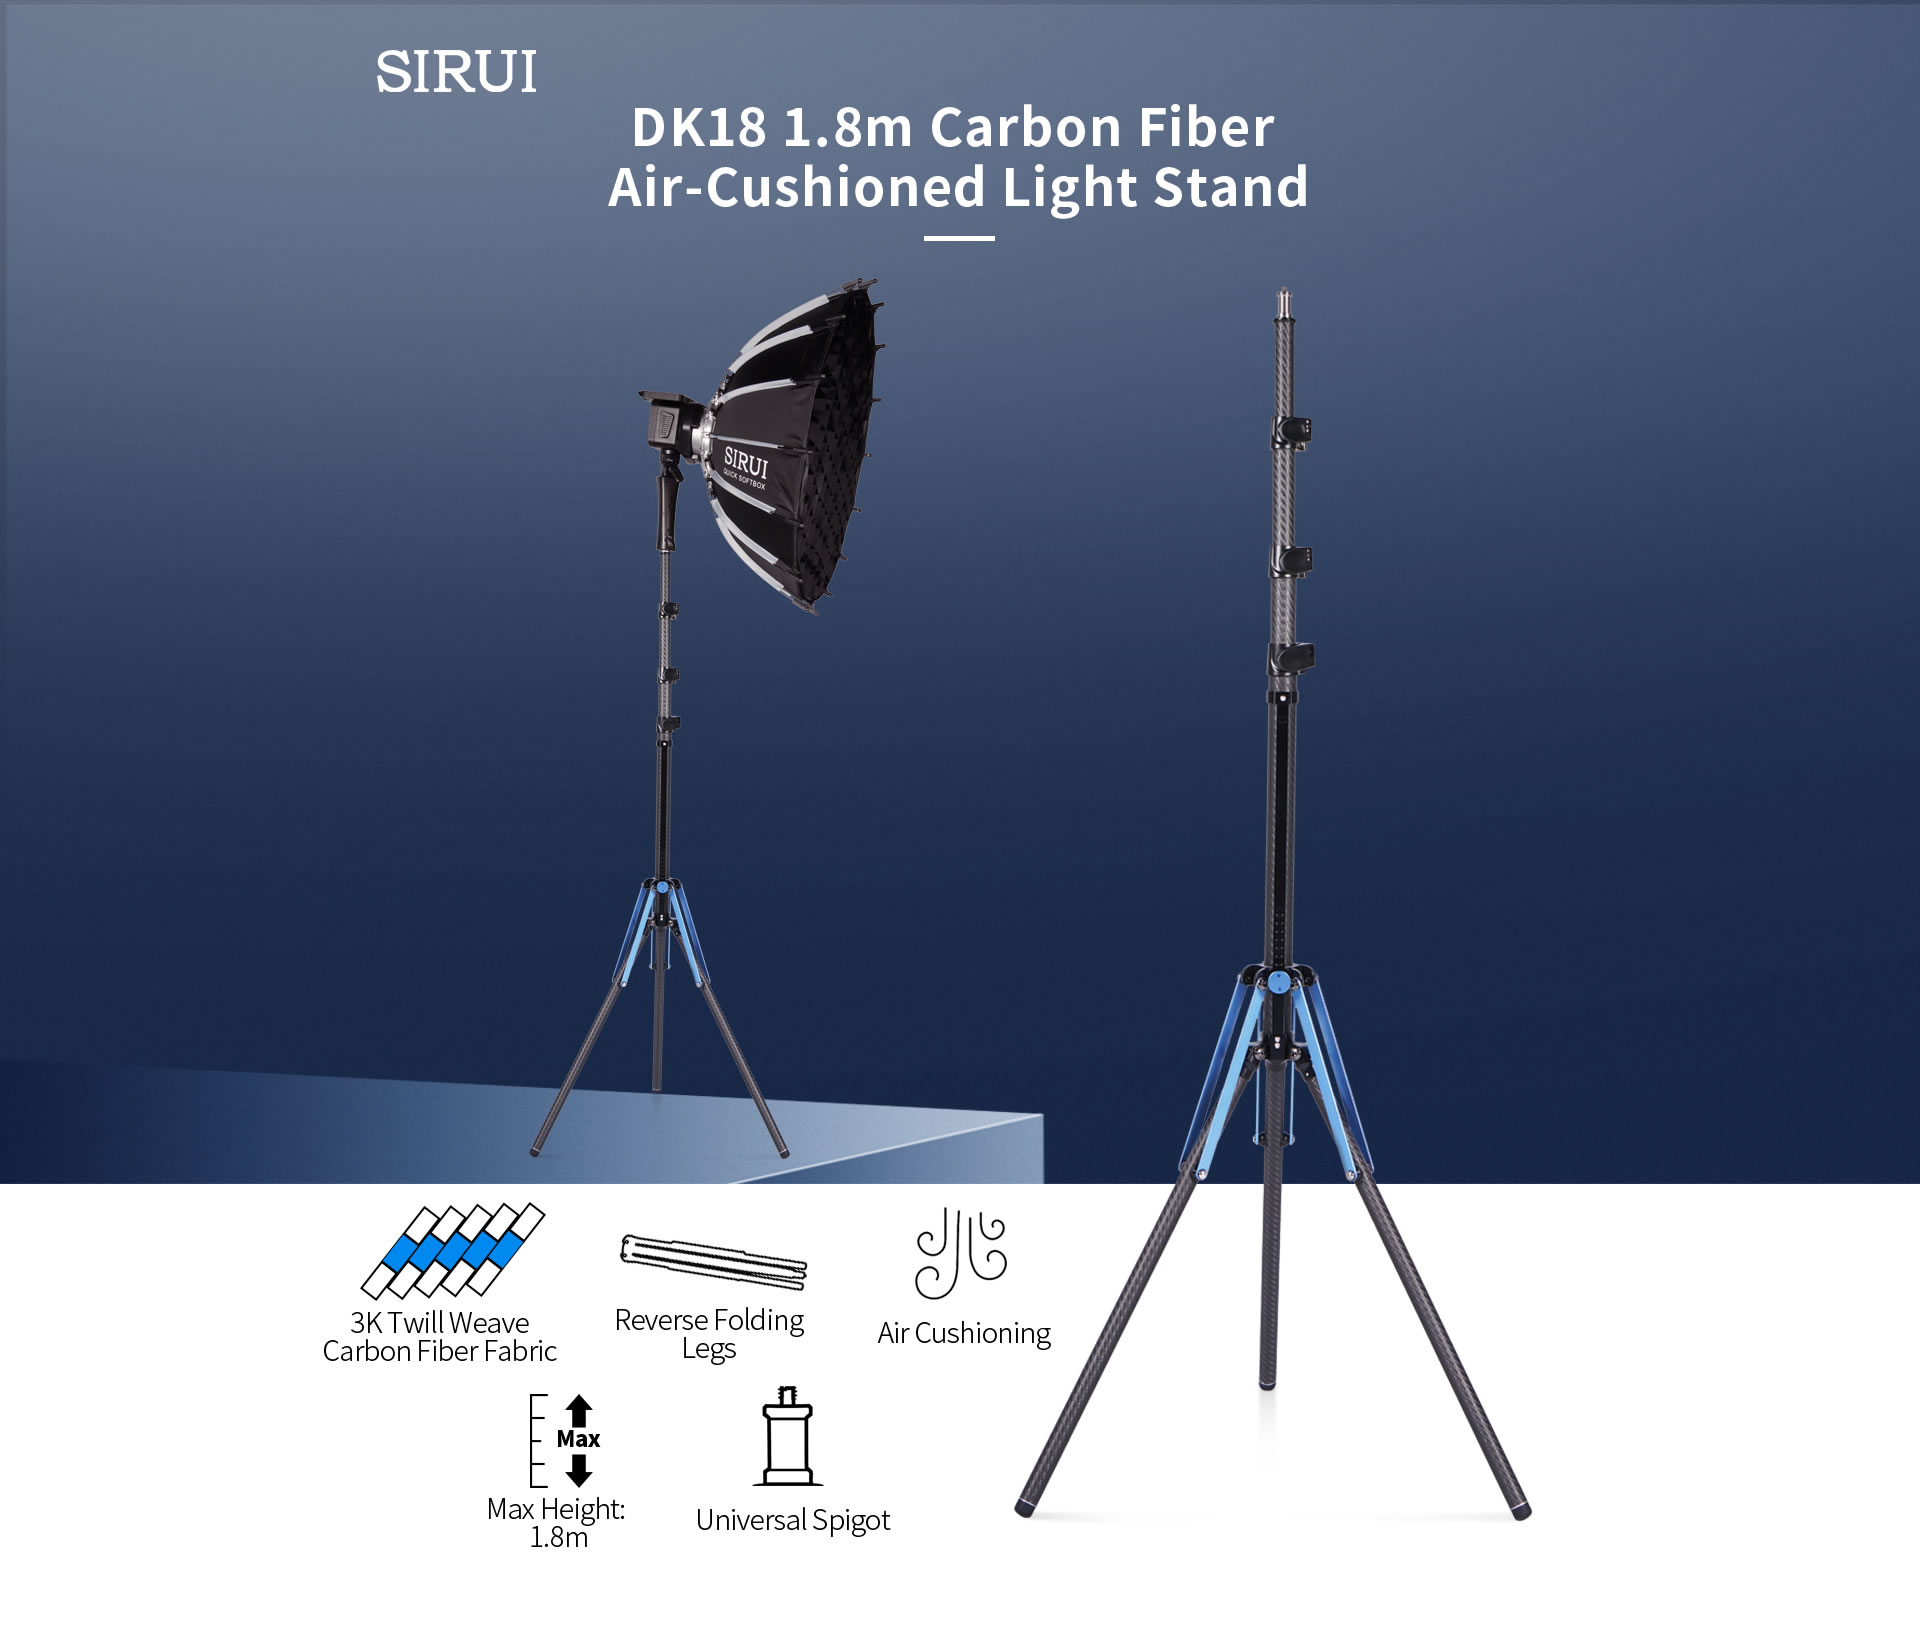 DK18 1.8m Carbon Fiber Air-Cushioned Light Stand